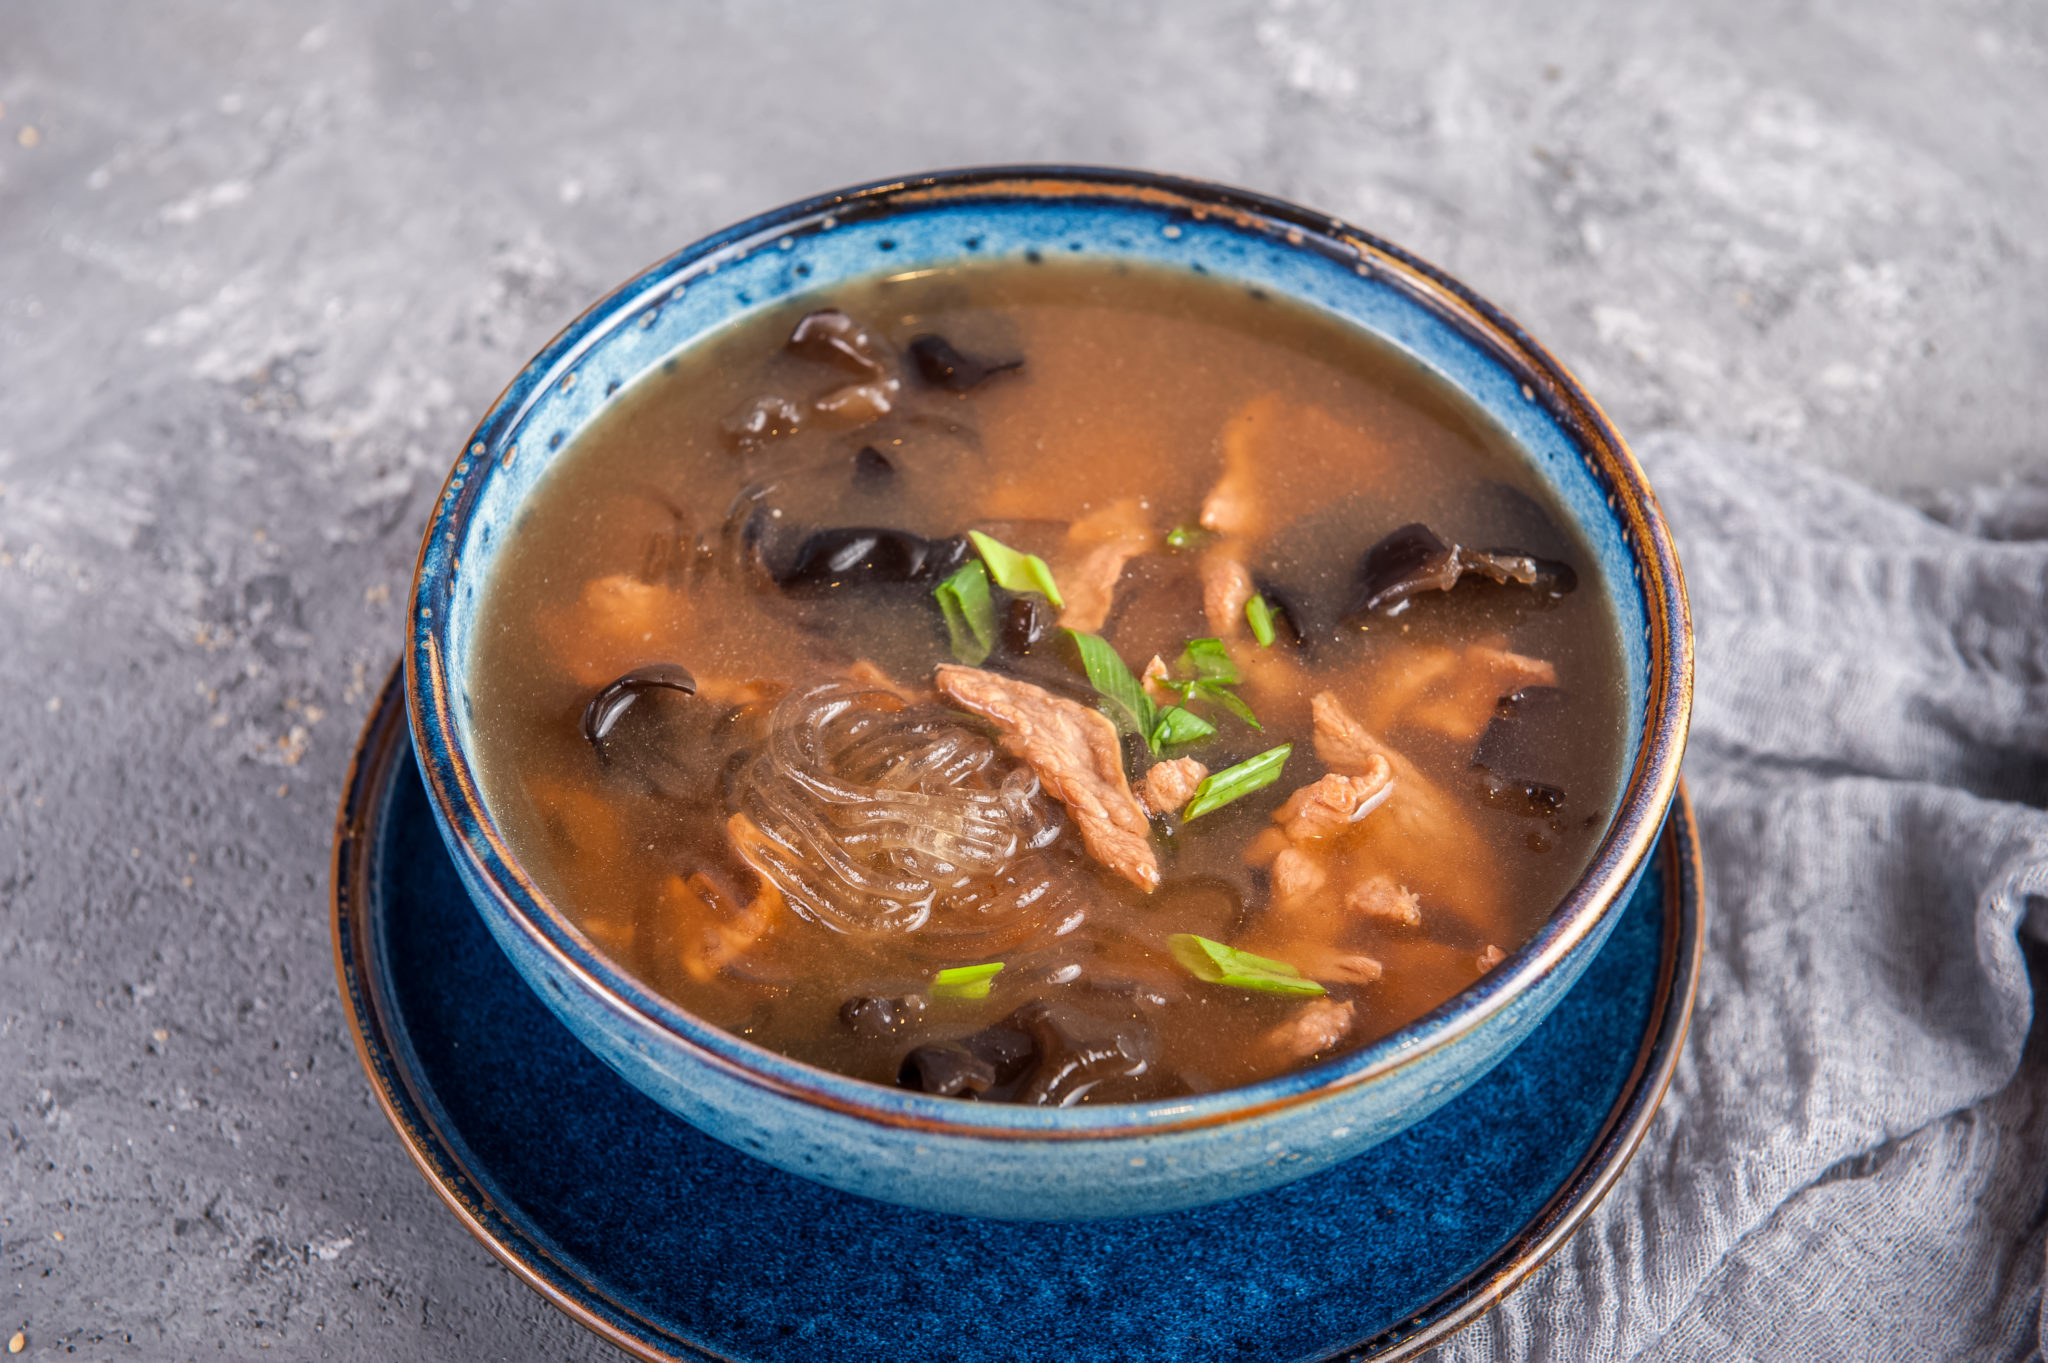 Суп лапша с говядиной рецепт с фото пошагово